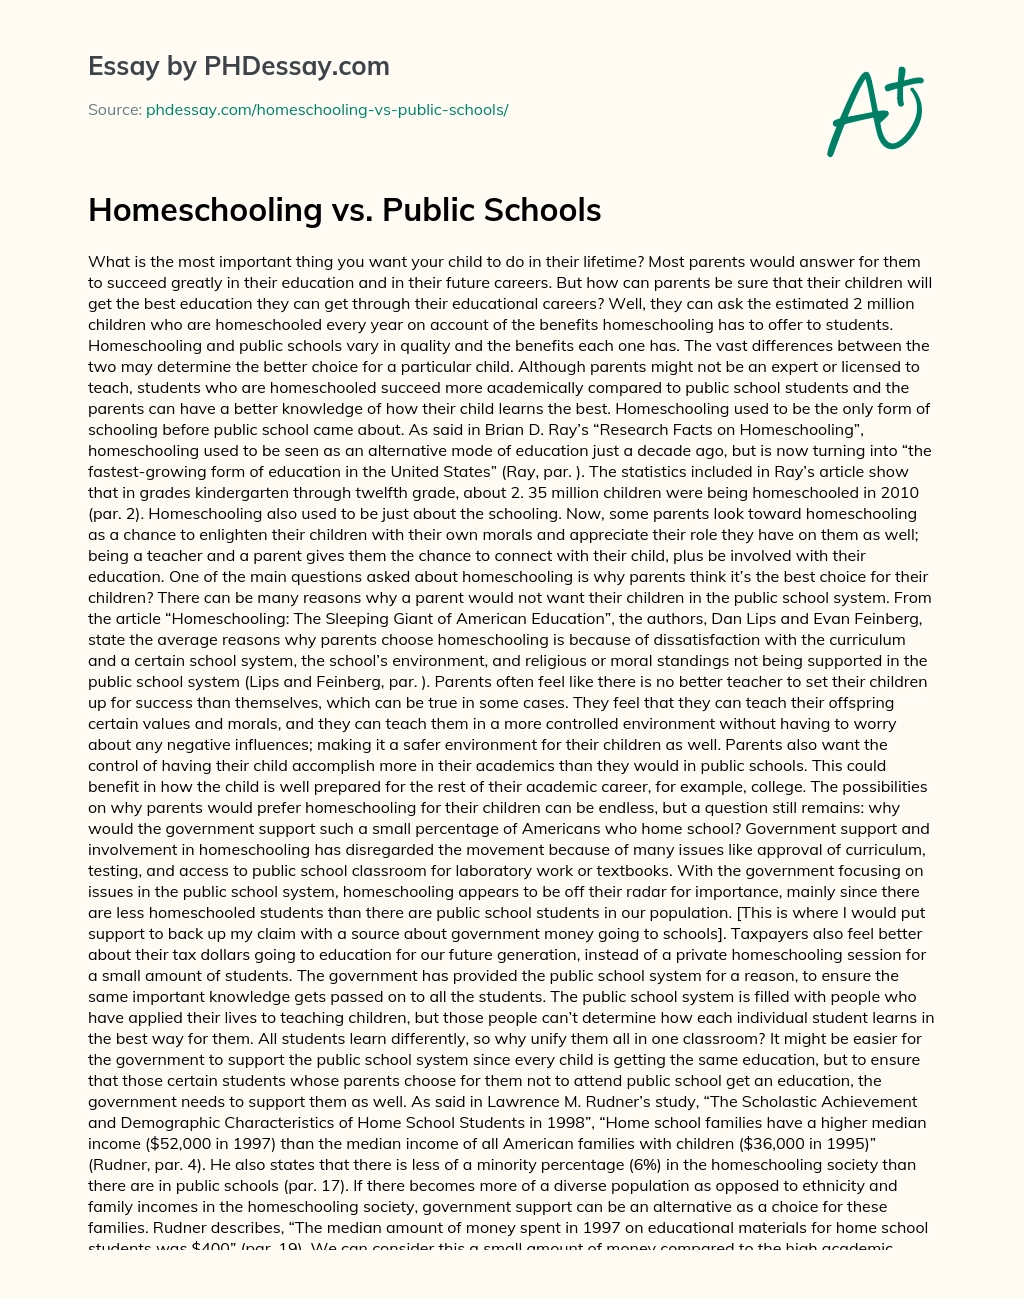 research paper on homeschooling vs public schools